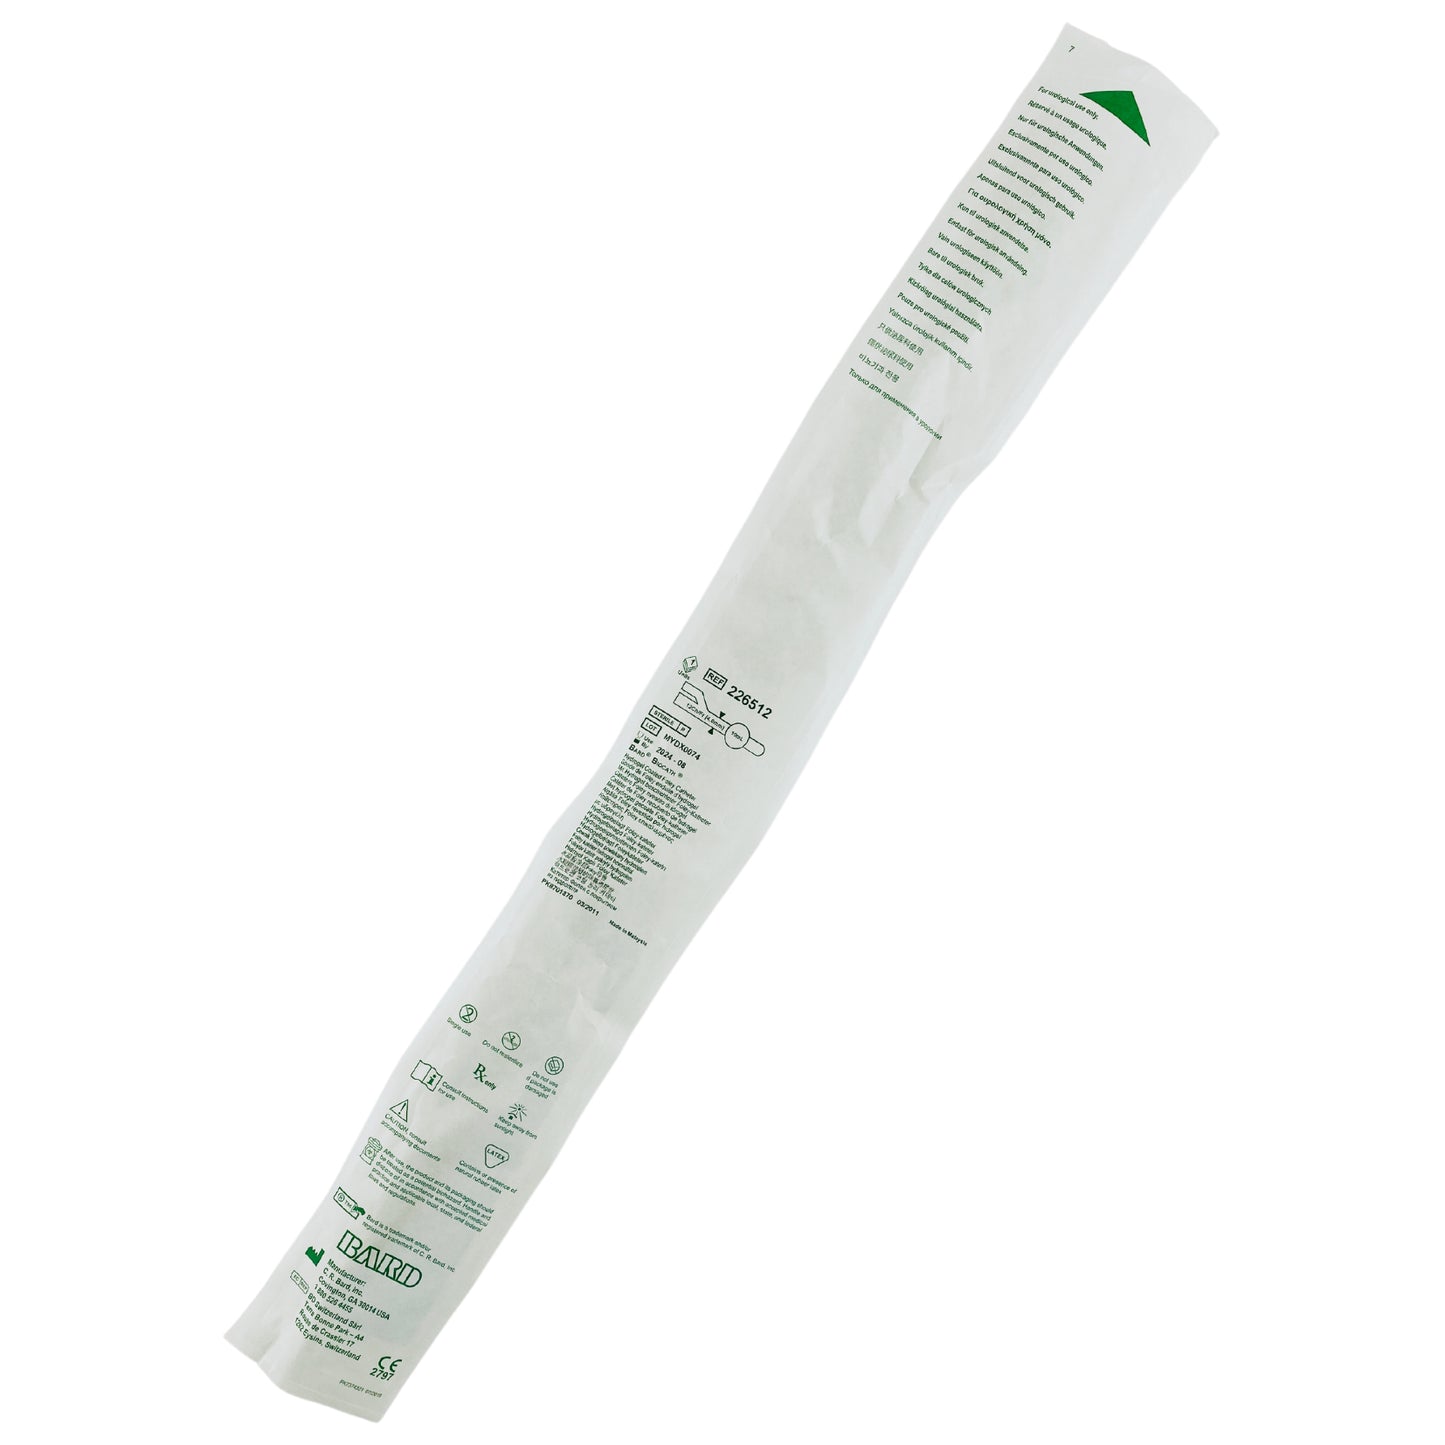 Biocath Hydrogel Coated Foley Catheter Male 40cm (1)